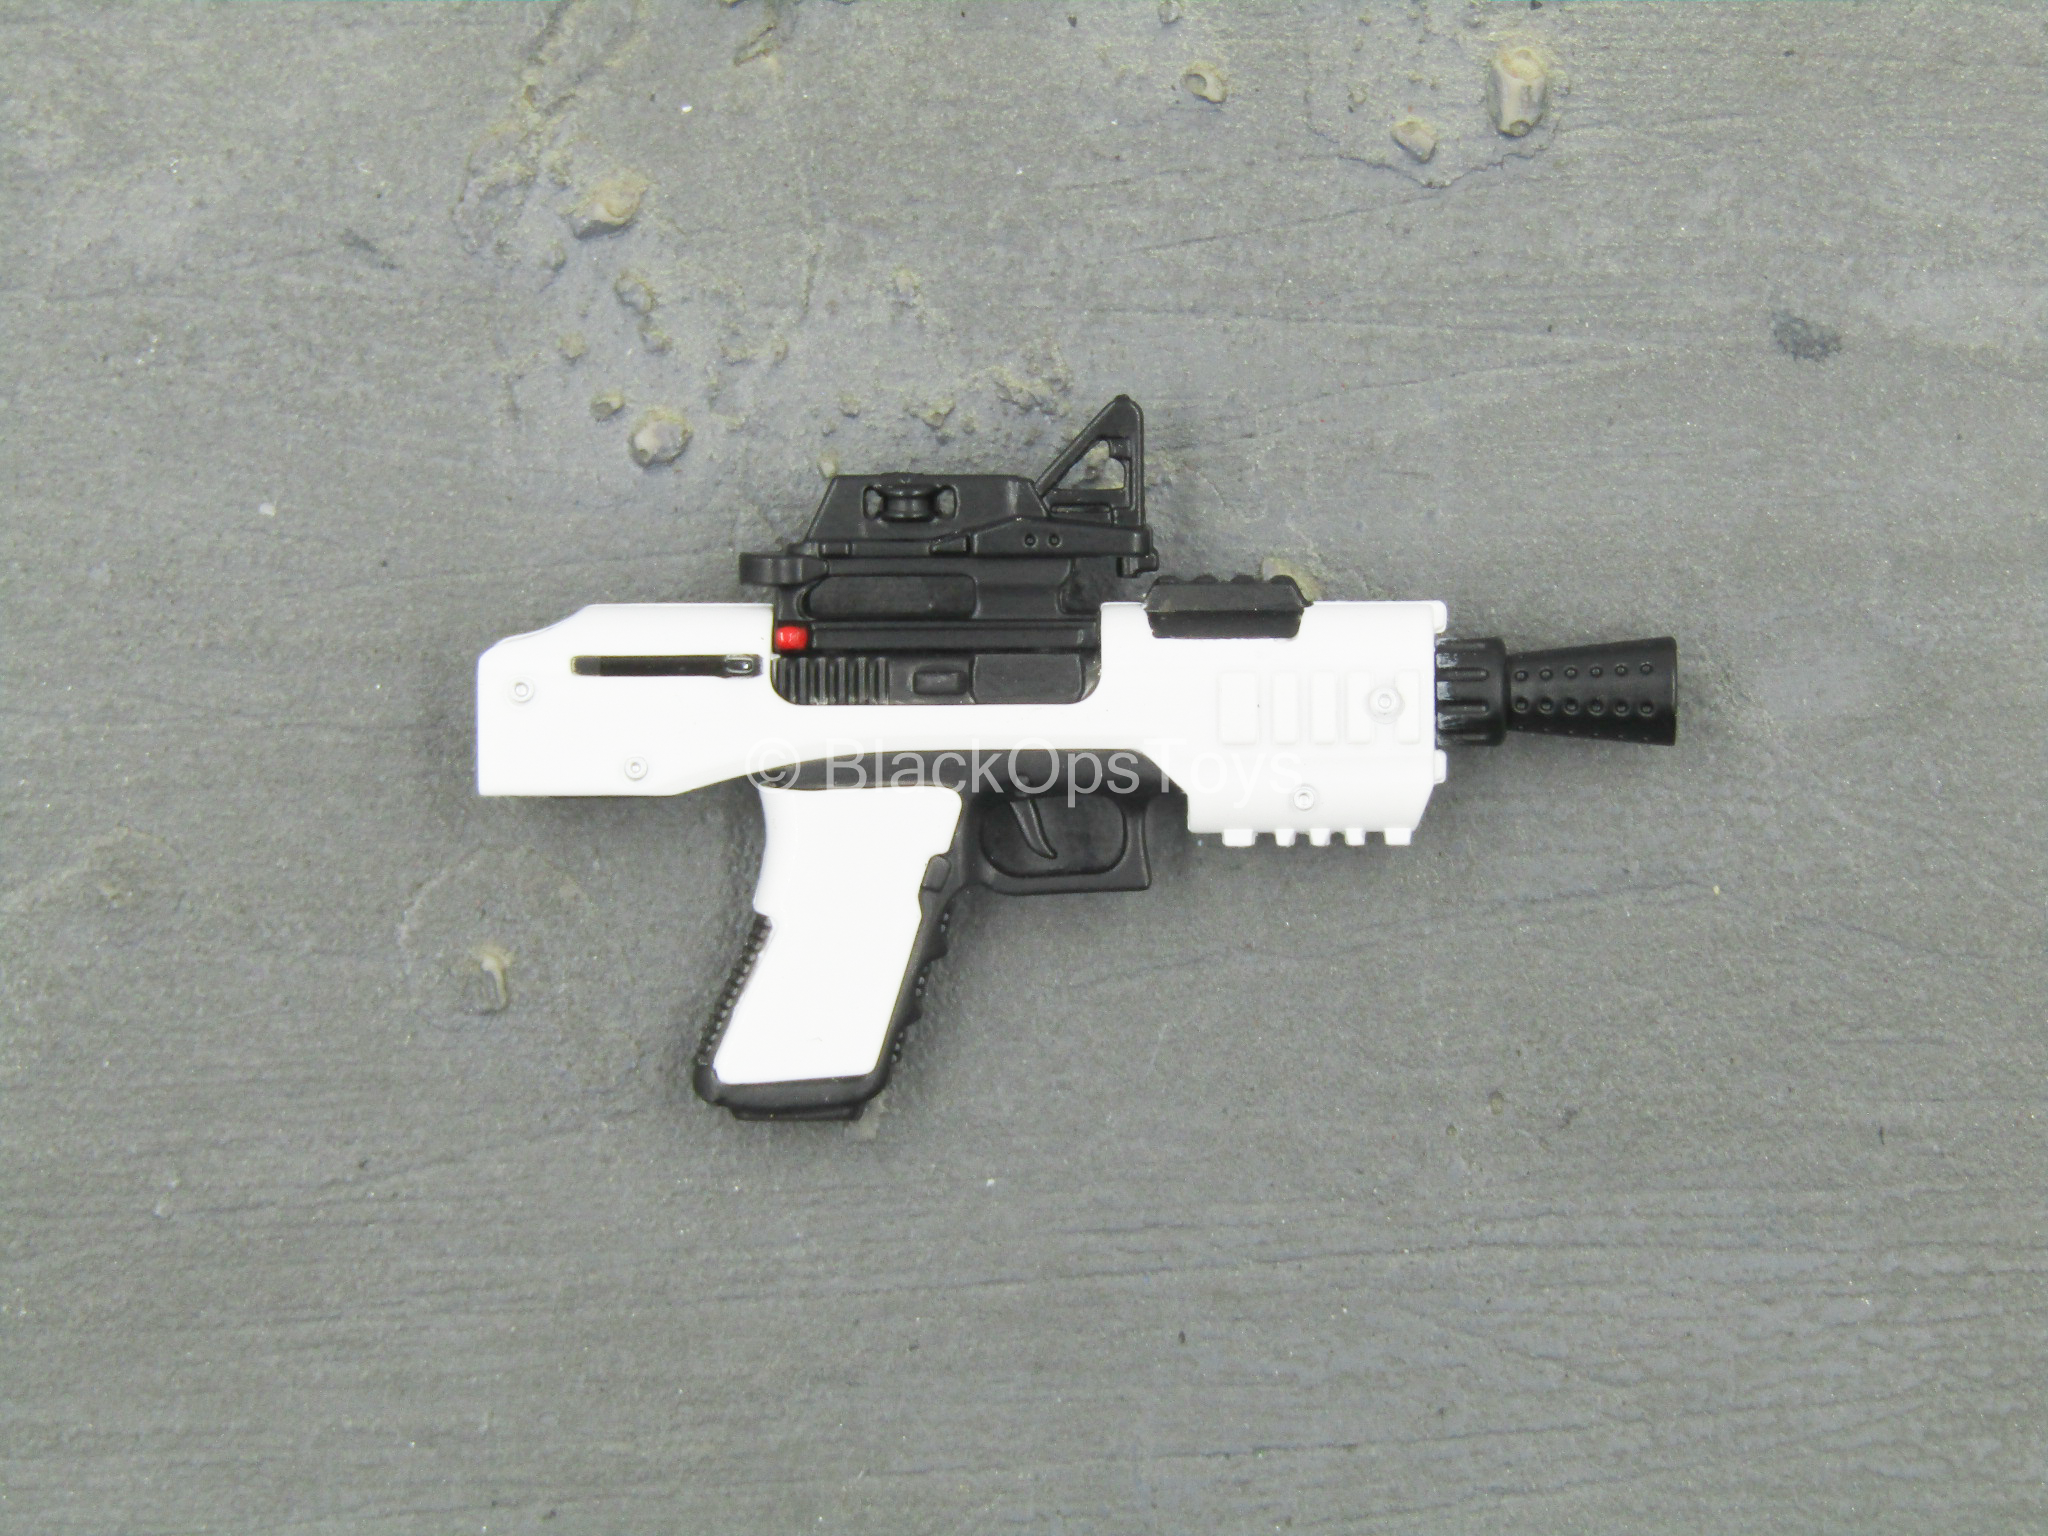 SE-44c Blaster Pistol – MOMCOM inc.